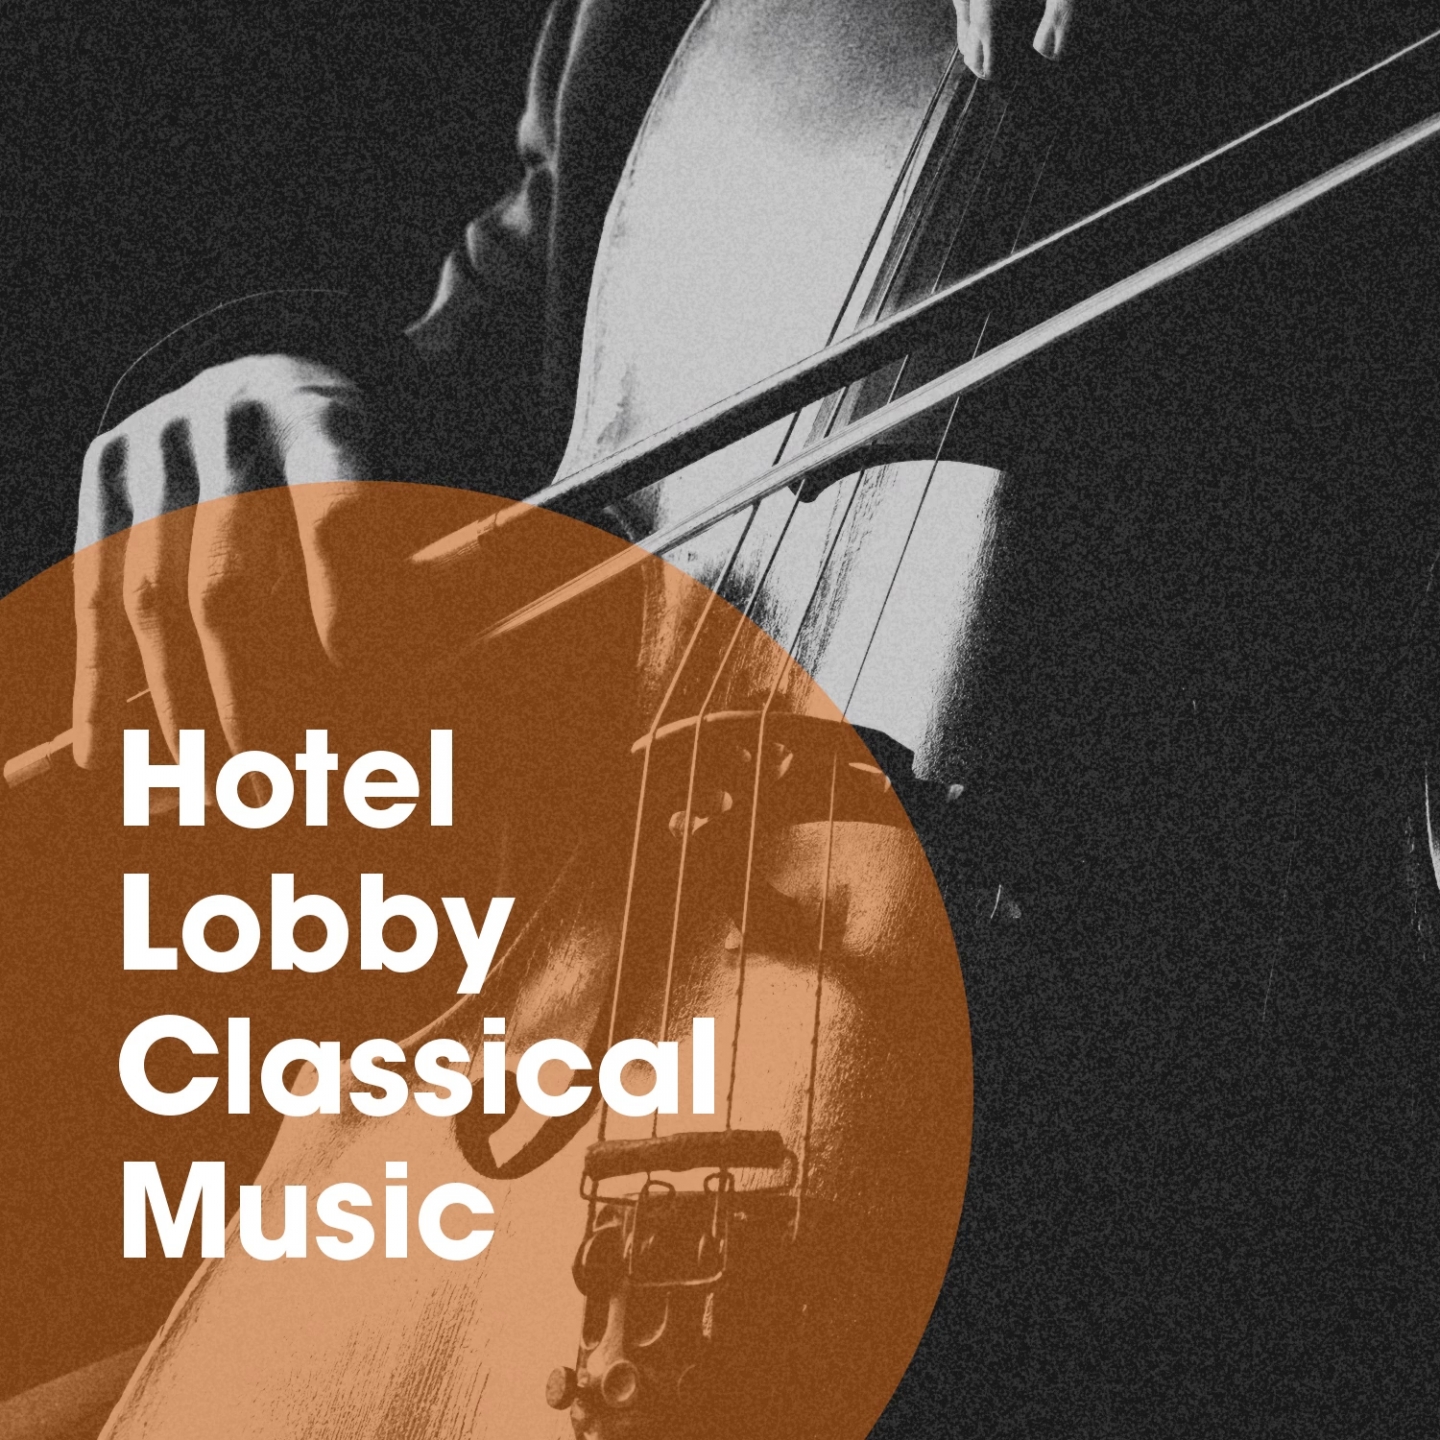 Hotel Lobby Classical Music